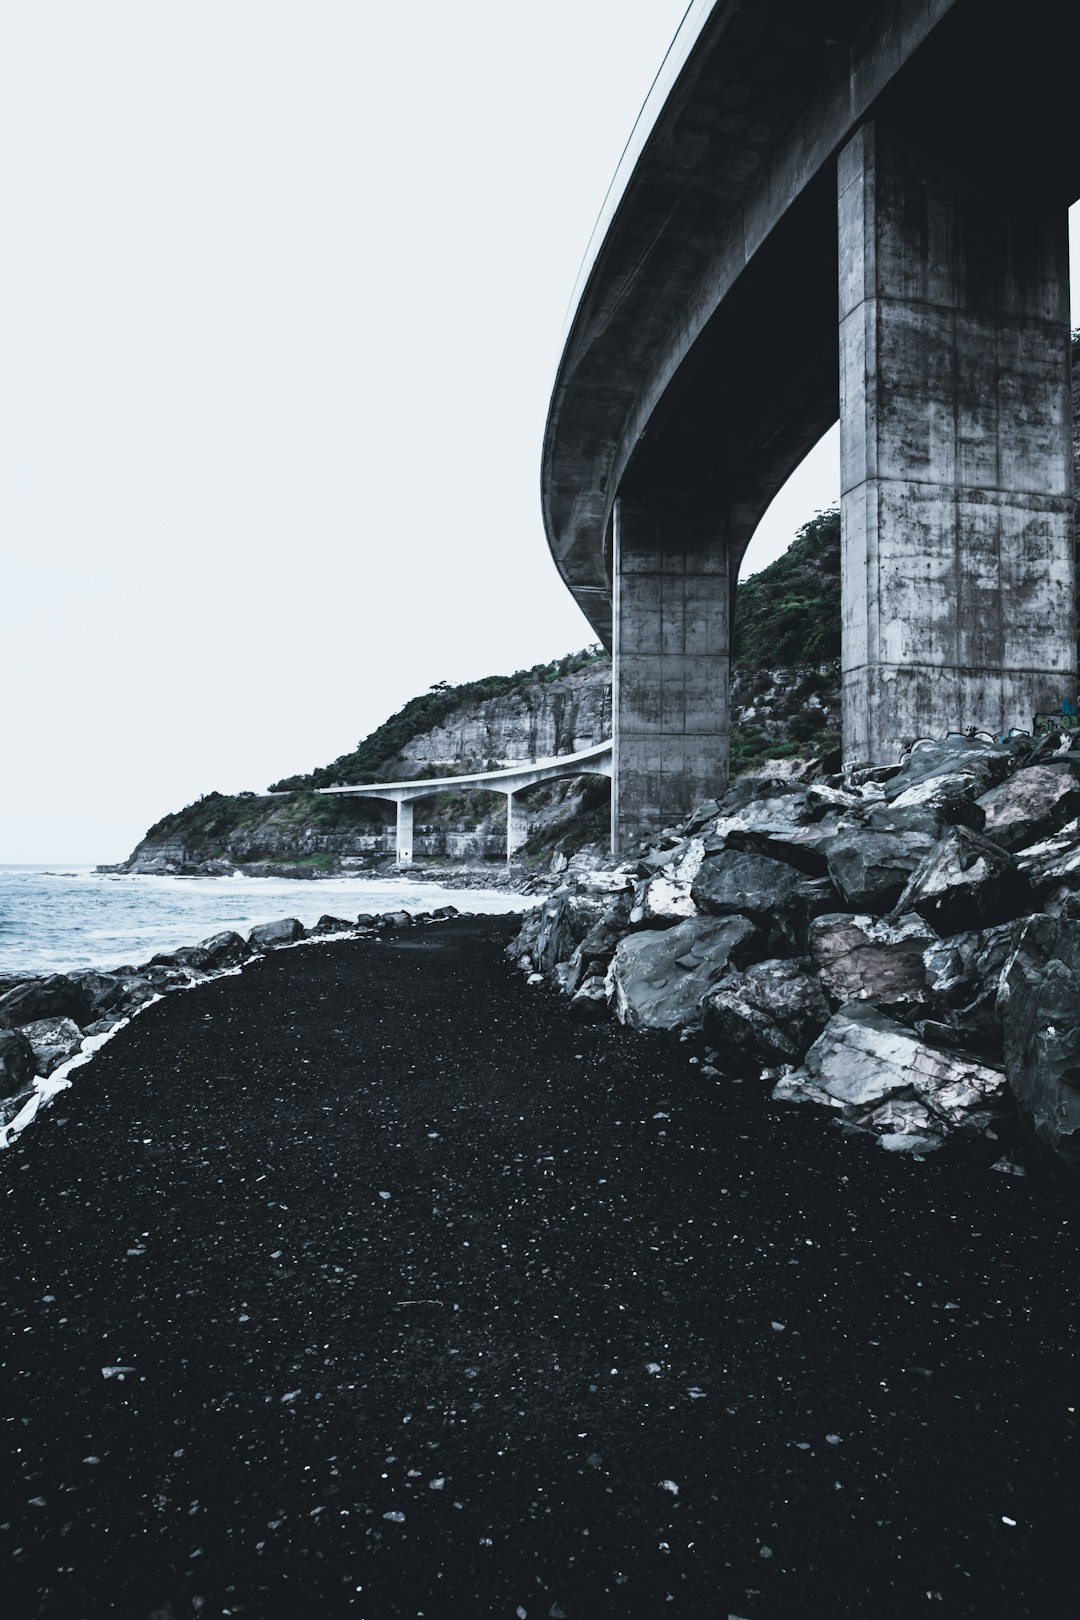 gray concrete bridge over the sea during daytime